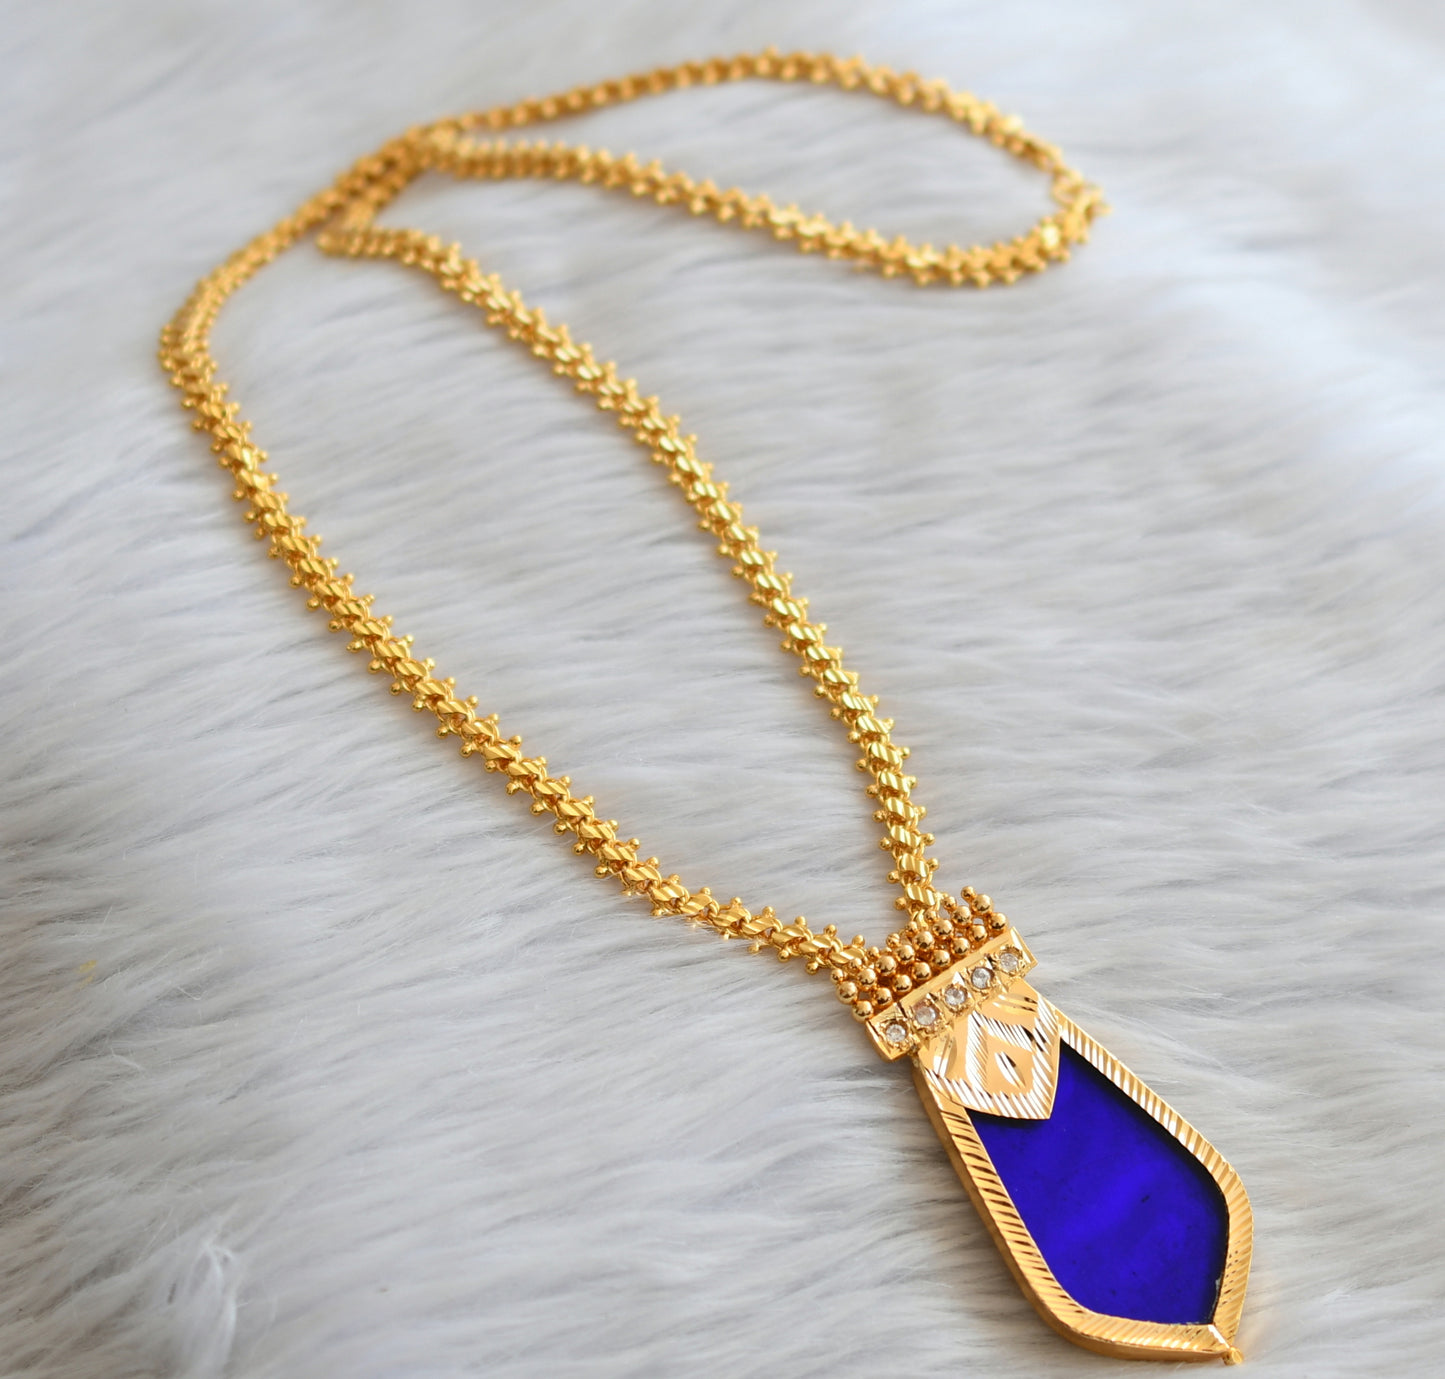 Gold tone kerala style 24 inches chain with blue-white nagapadam pendant dj-45958